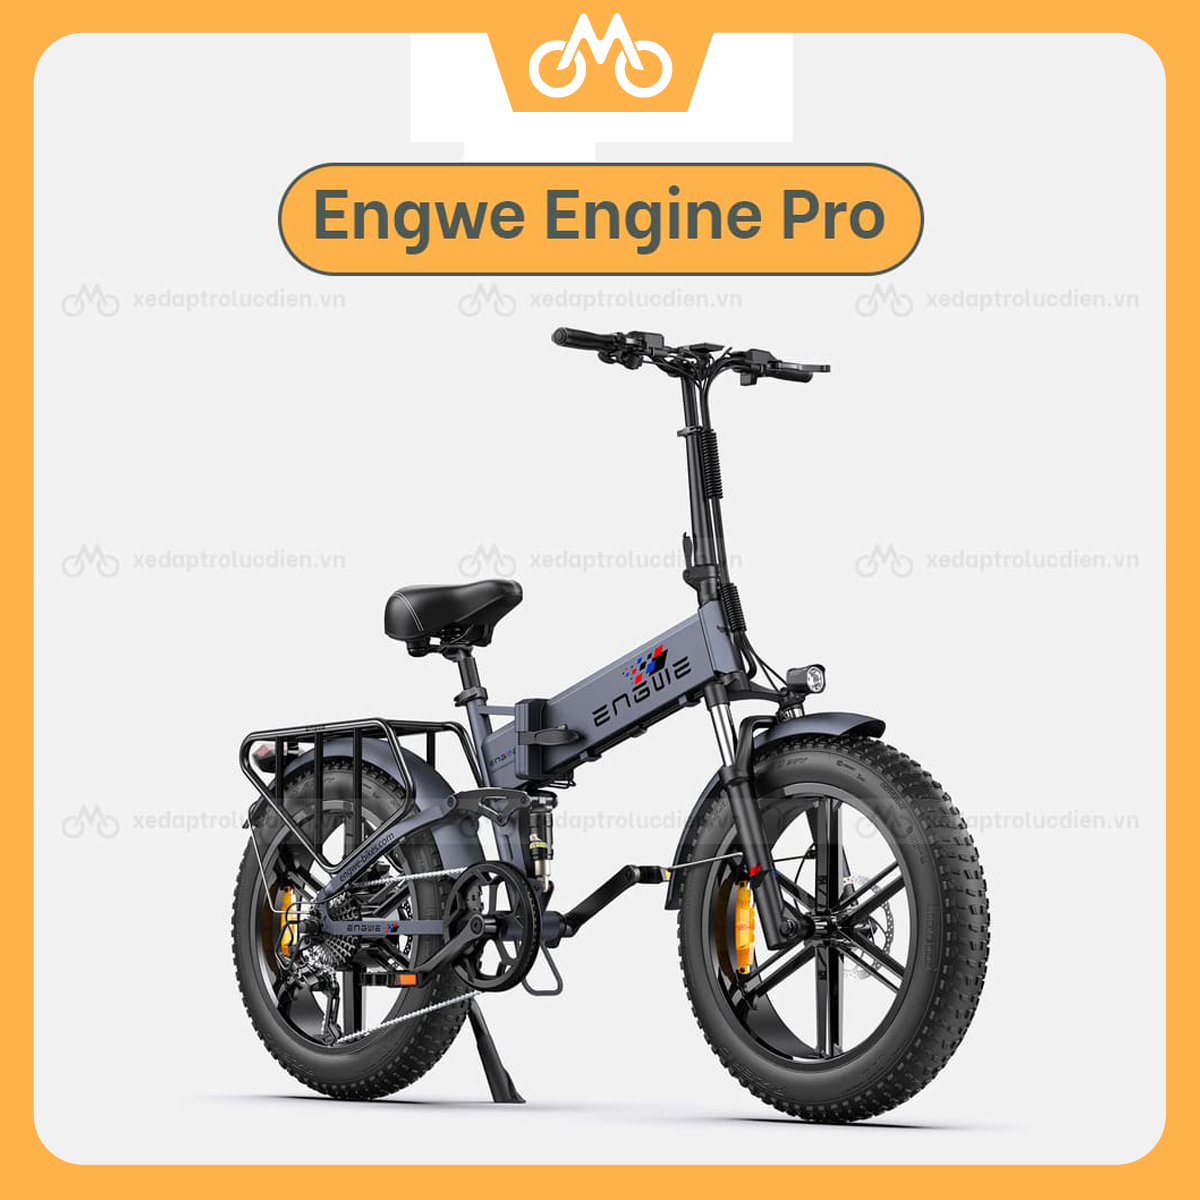 Engwe Engine Pro màu xám